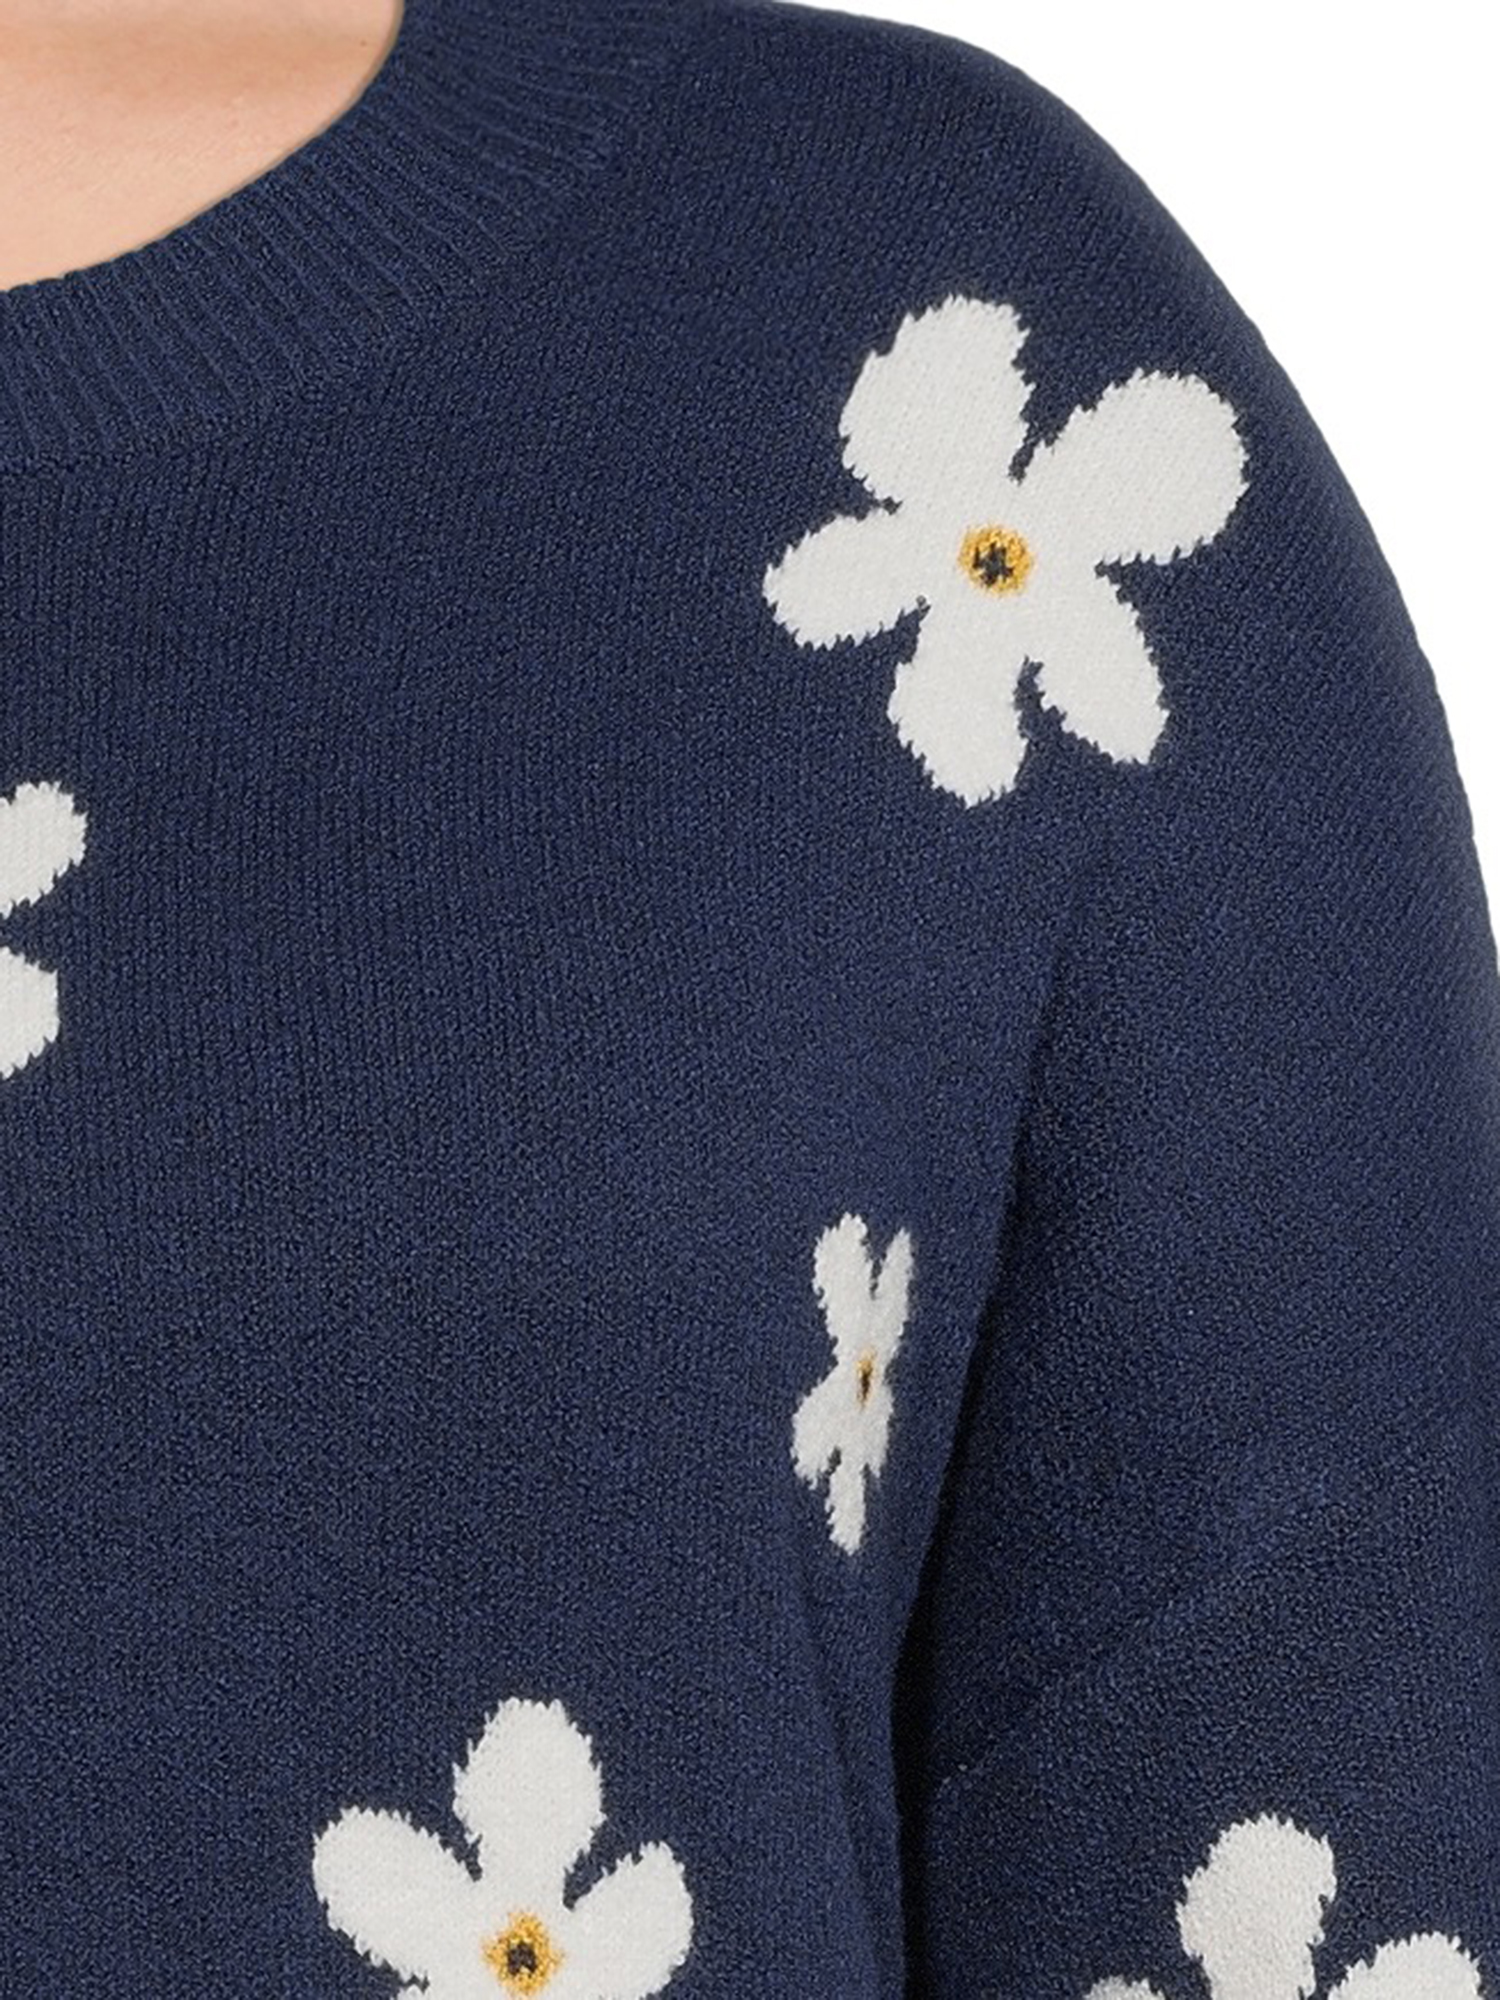 Terra & Sky Women's Plus Size Drop Shoulder Print Sweater, Midweight - image 3 of 5